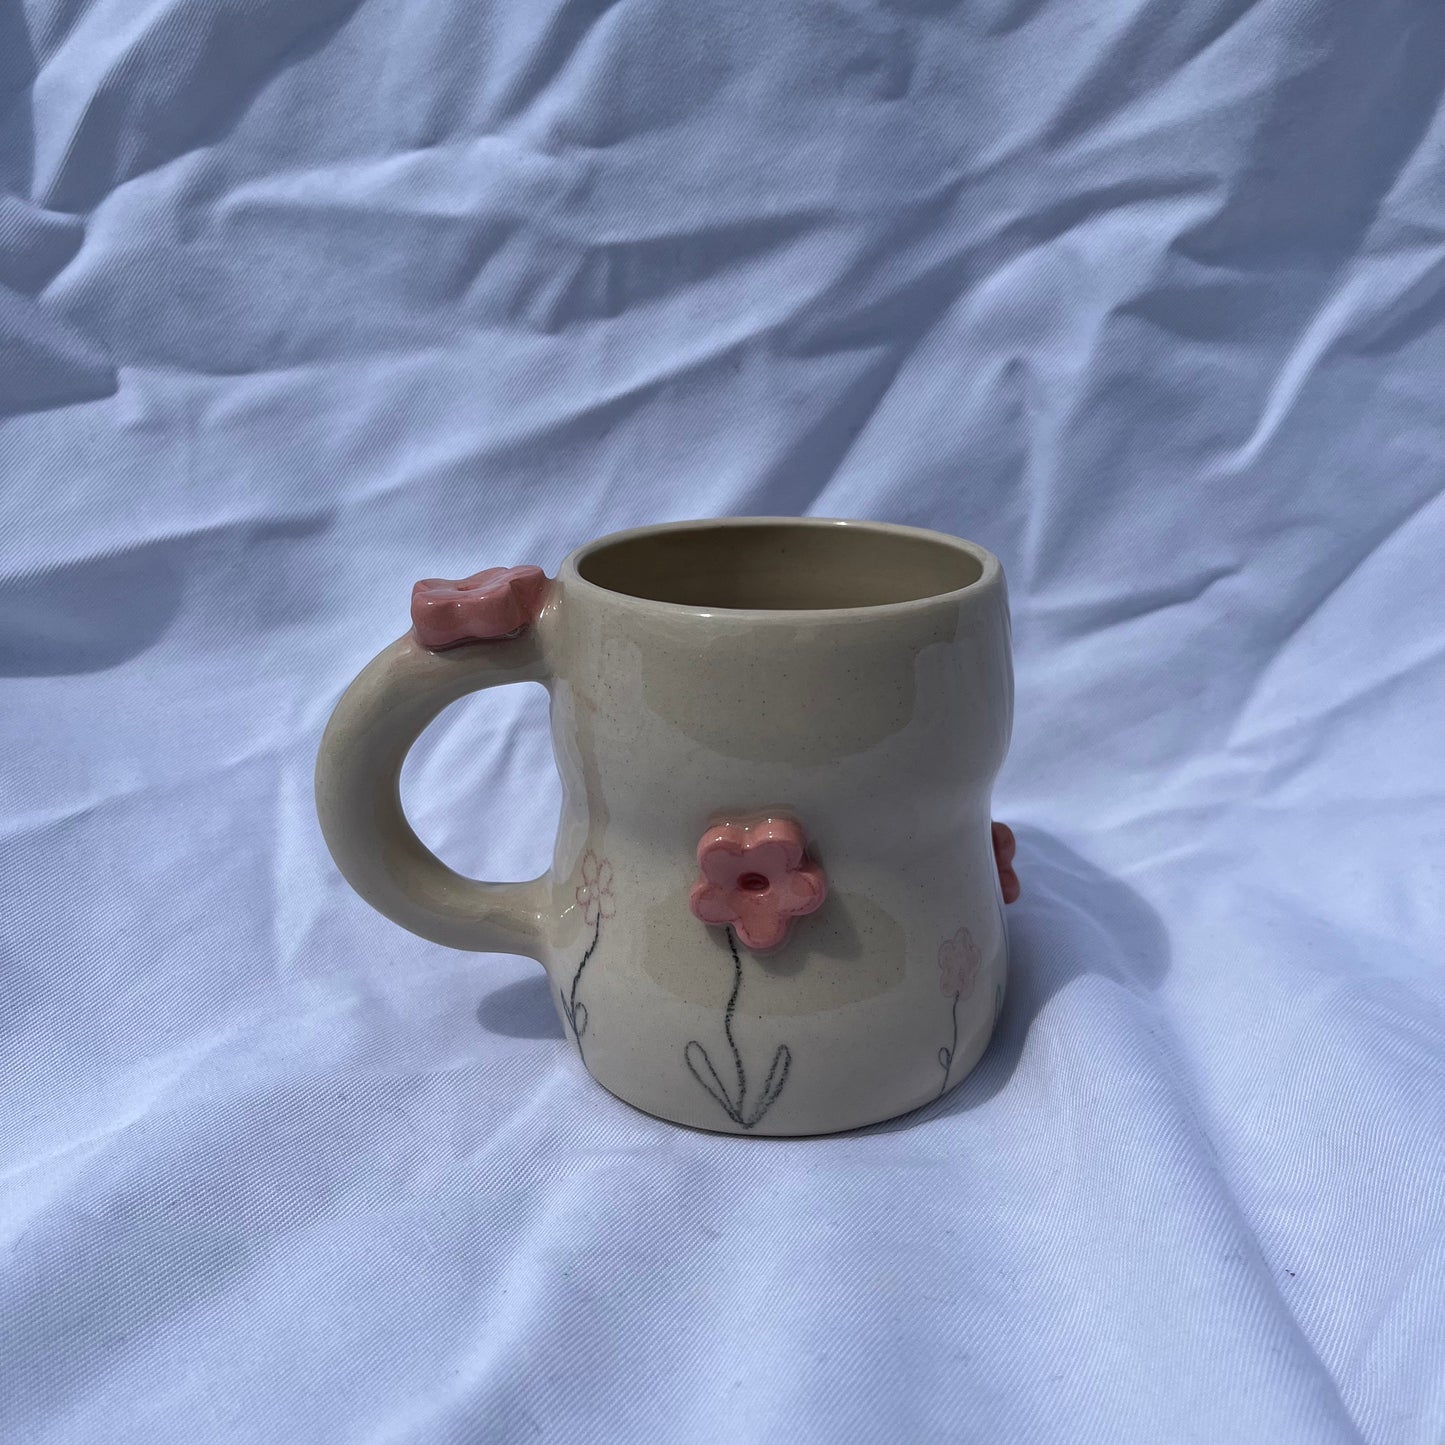 Imperfect flower mug